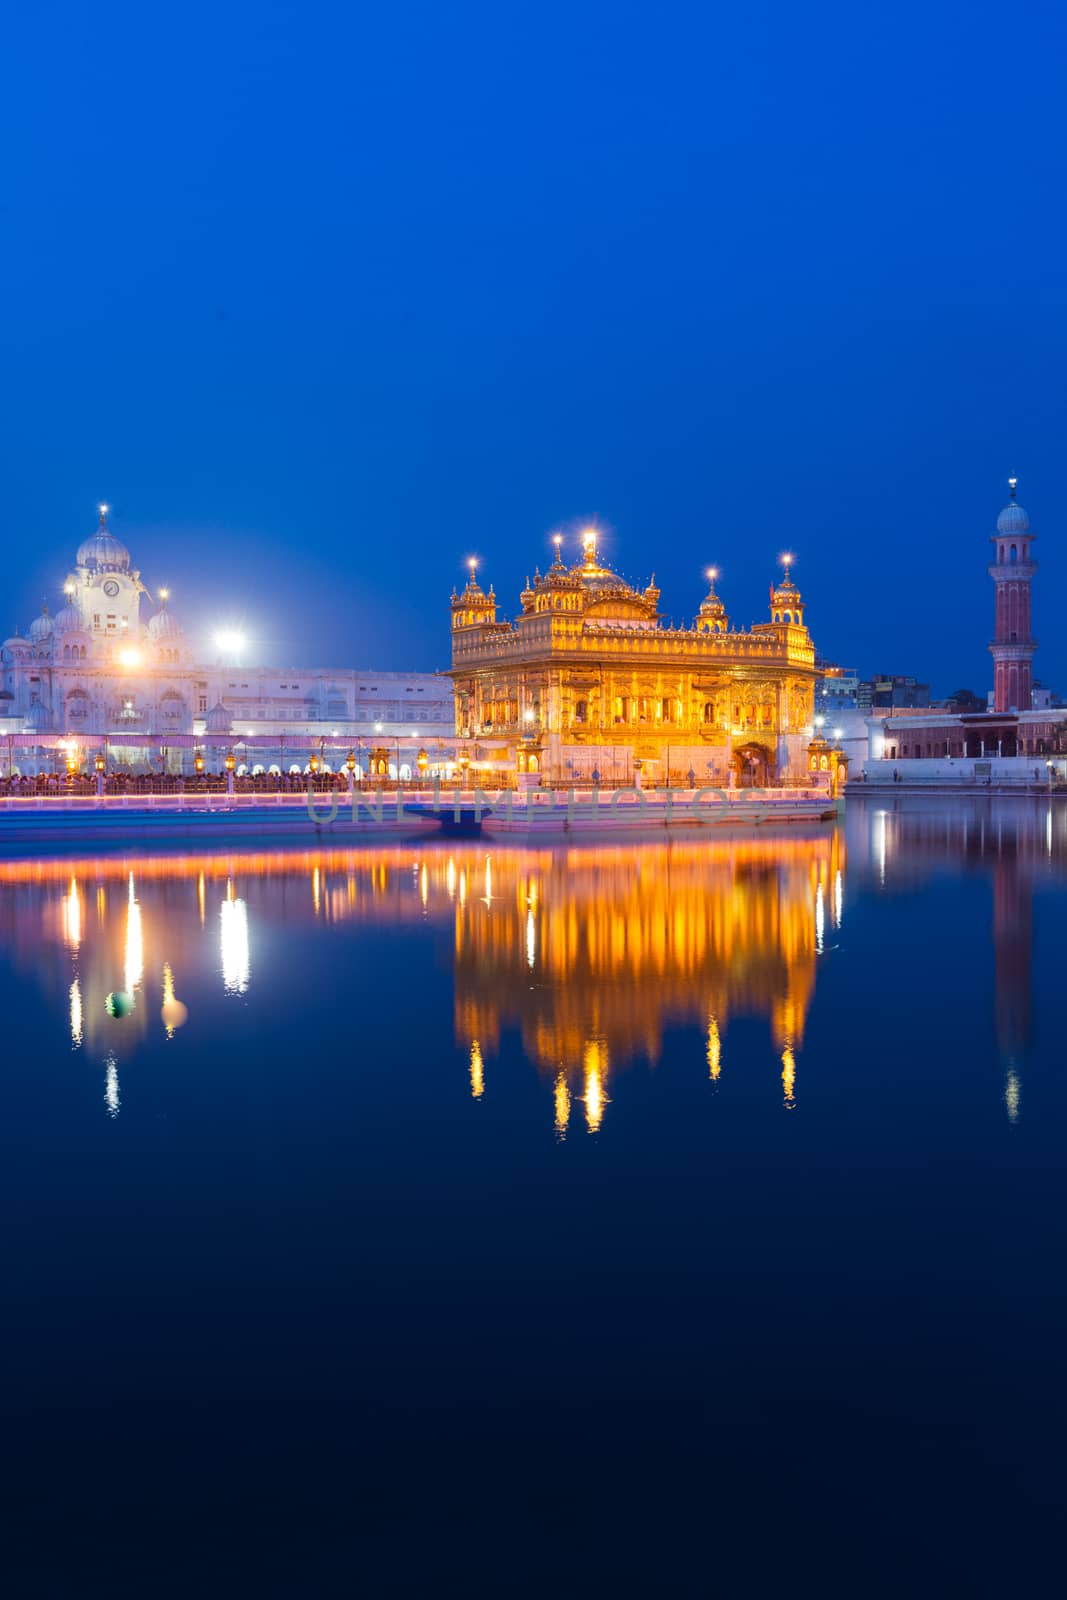 Sikh sacred site gurdwara Sri Harmandir Sahib (also known as The Golden Temple, also Darbar Sahib) illuminated at night. Amritsar, Punjab state, India